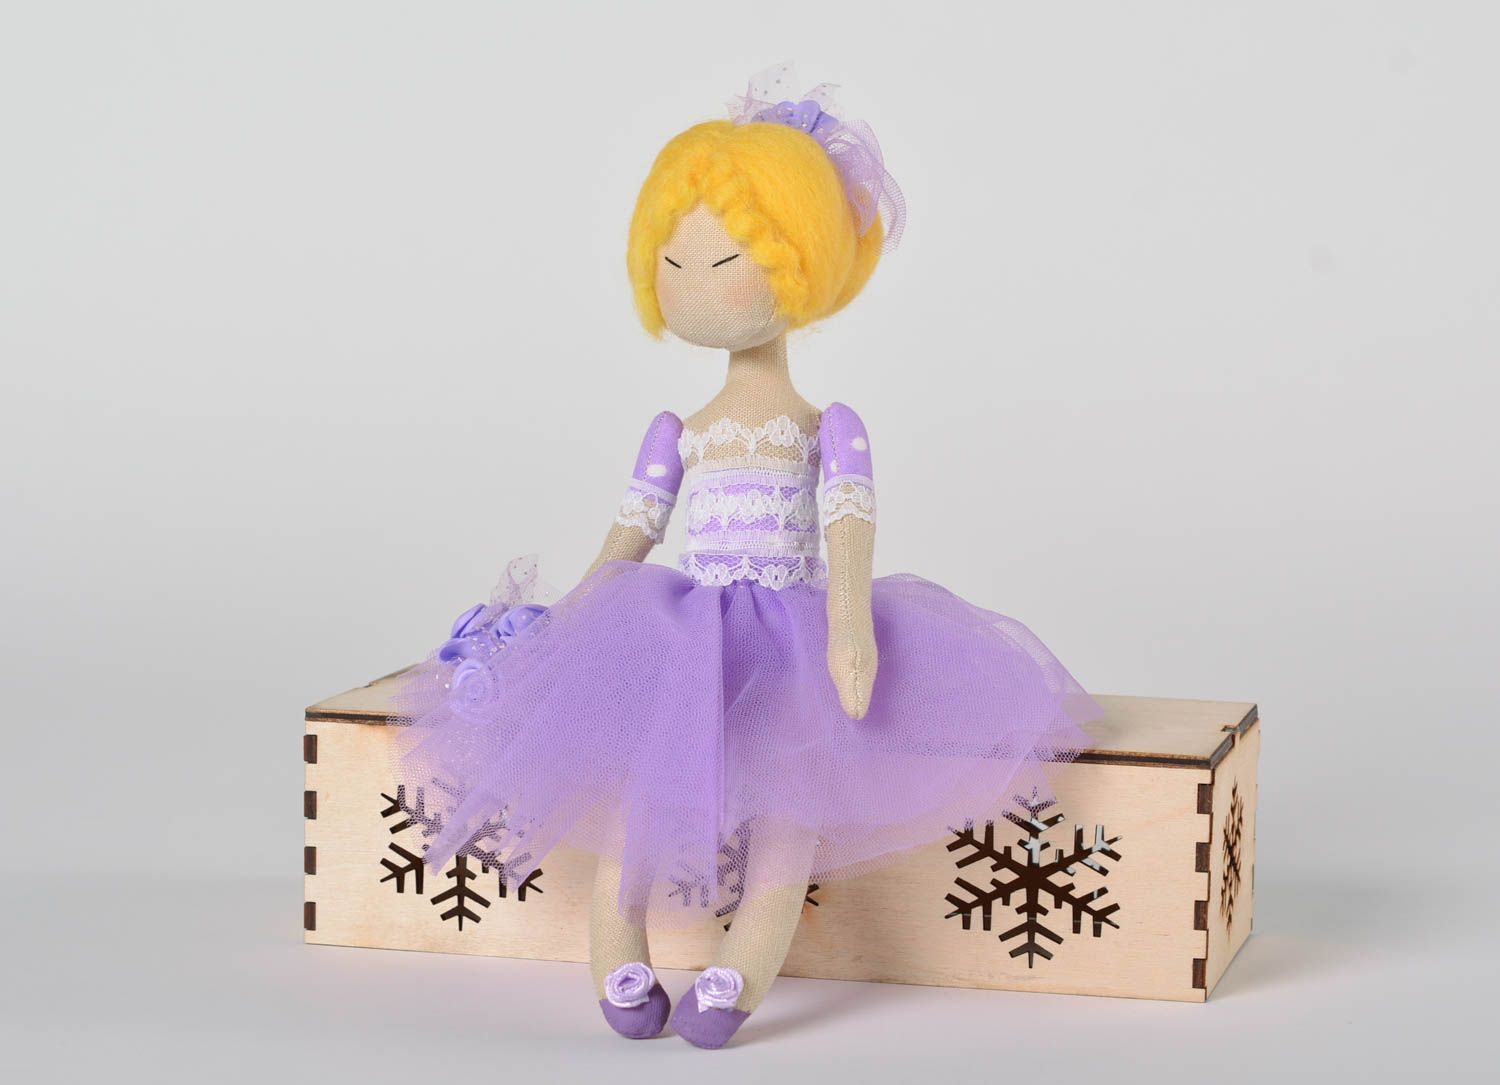 Handmade fabric doll decorative stuffed toy present for baby nursery decor photo 1